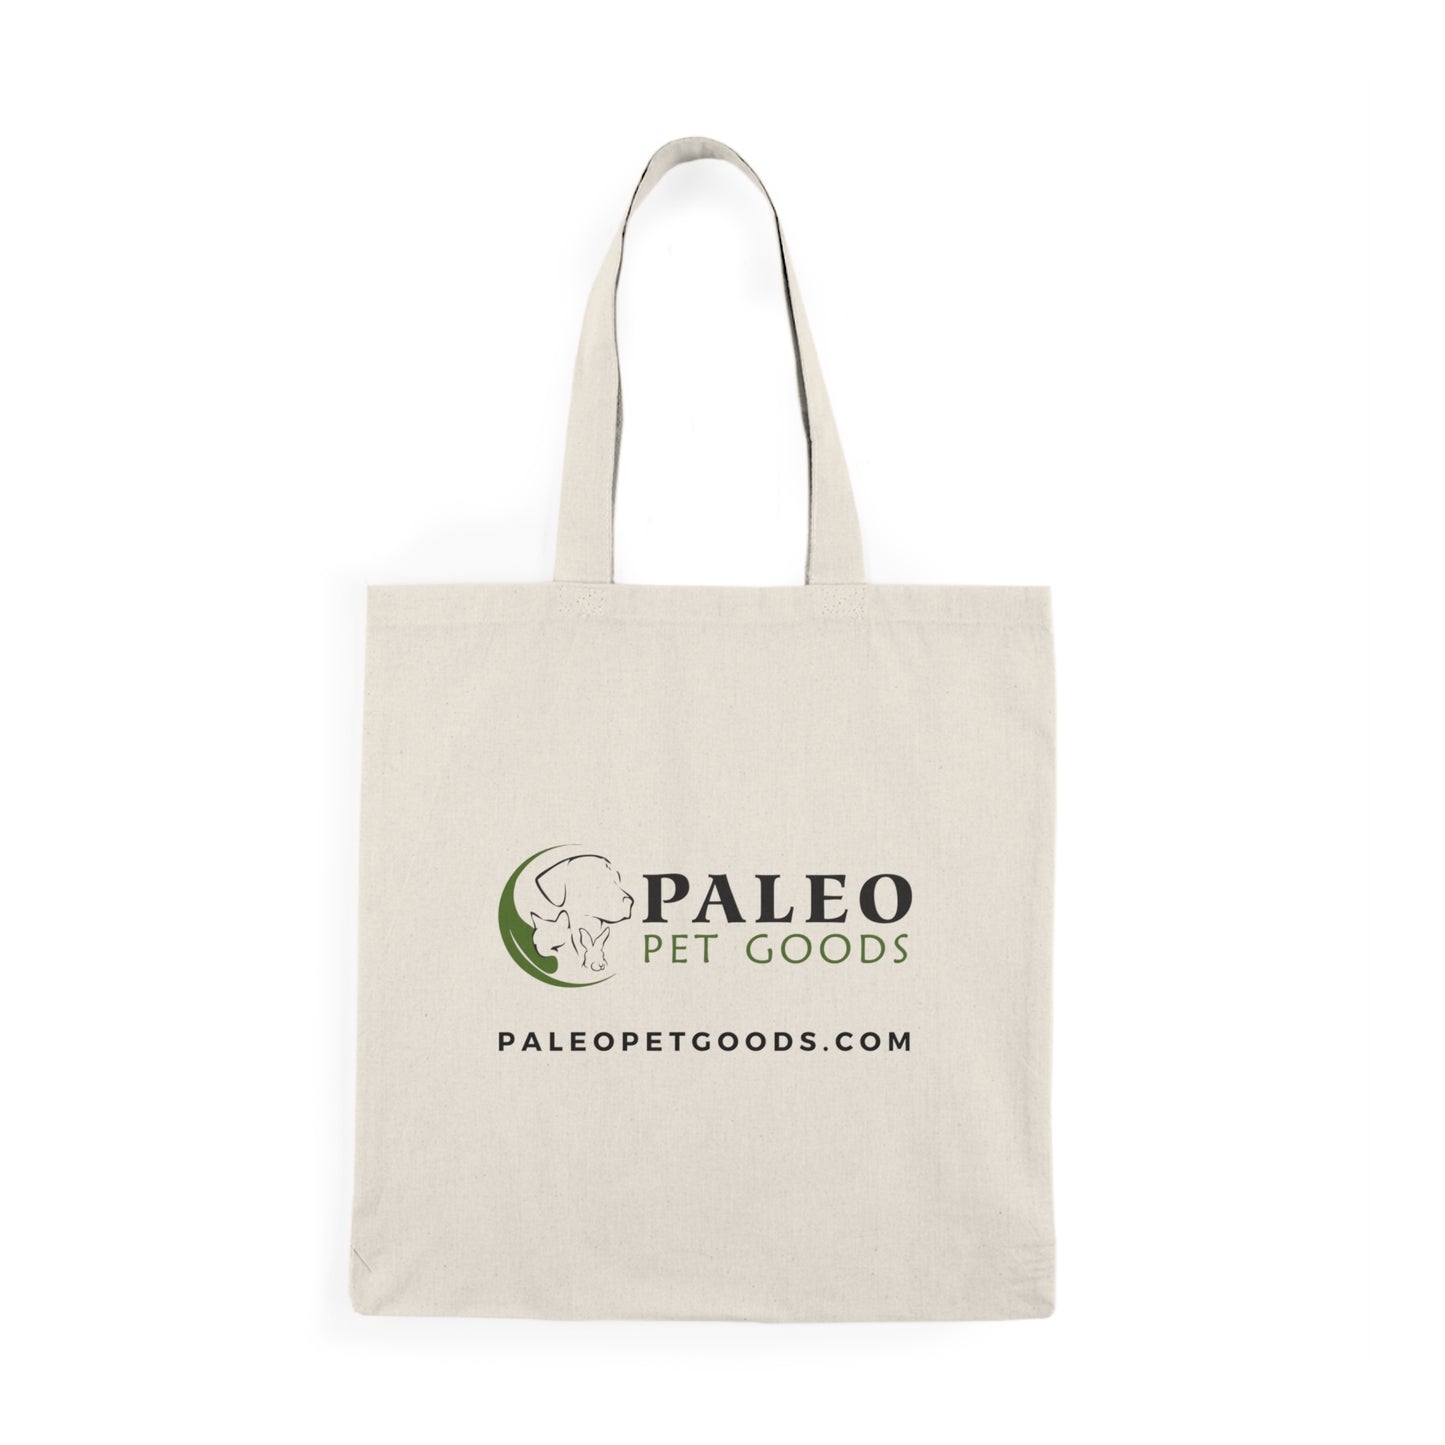 Paleo Pet Goods- Lily Fluff Around Tote Bag